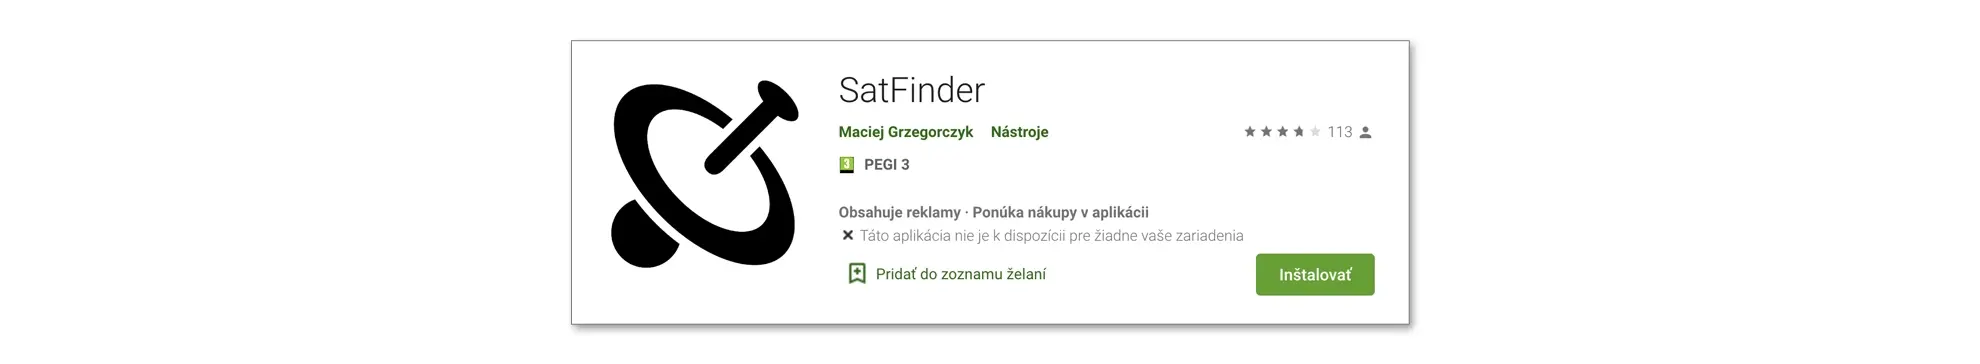 SatFinder Google store